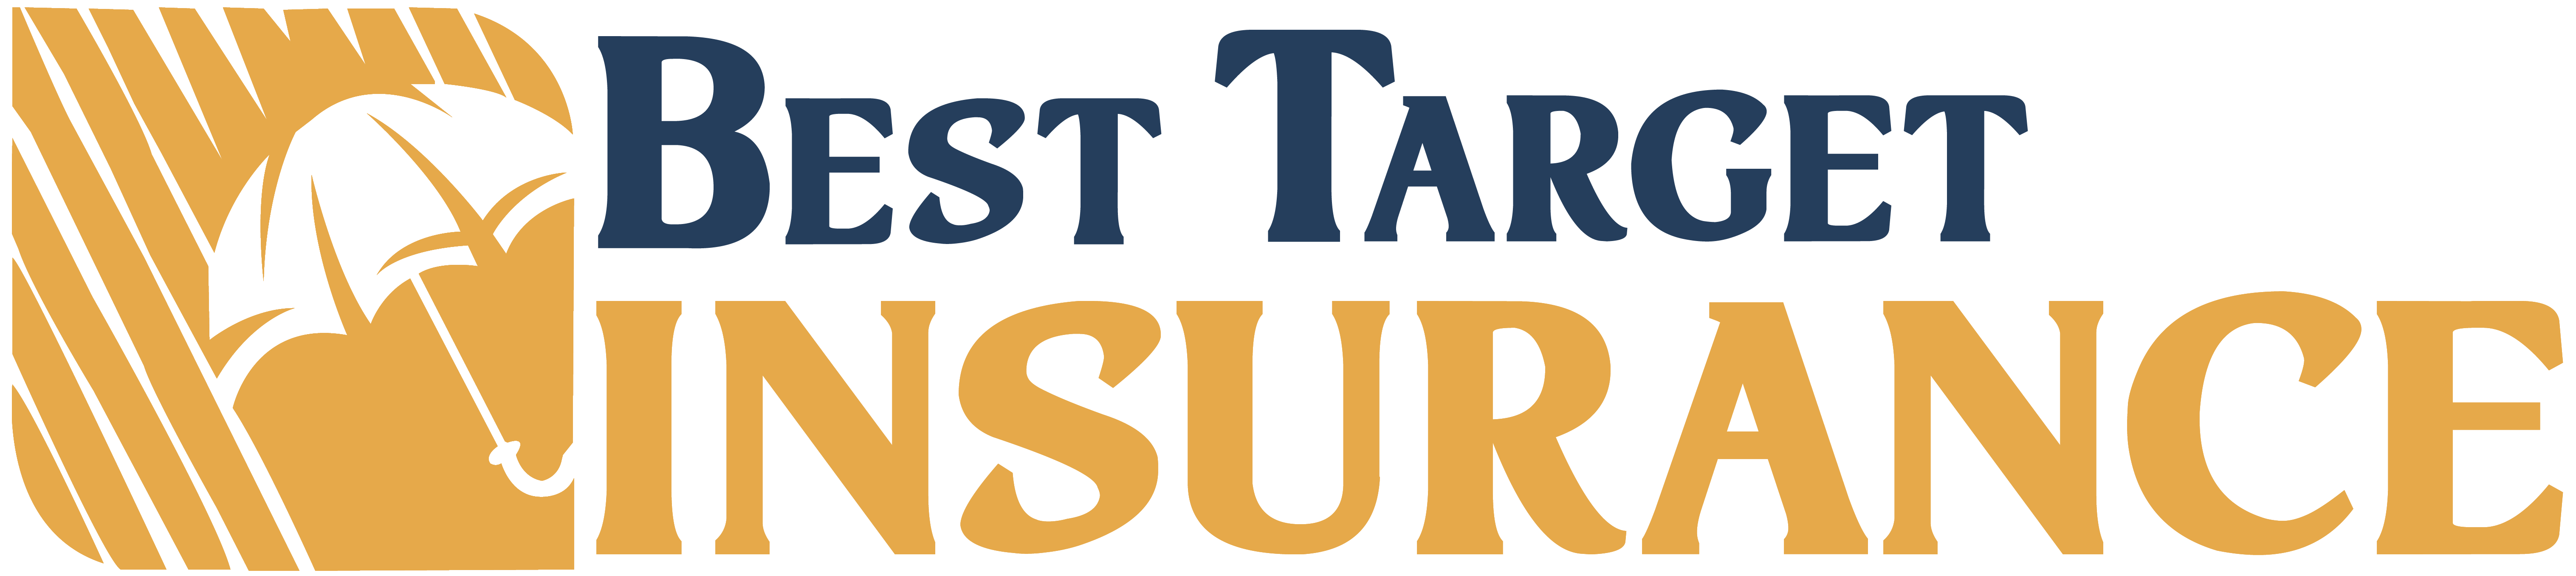 best target insurance logo 4